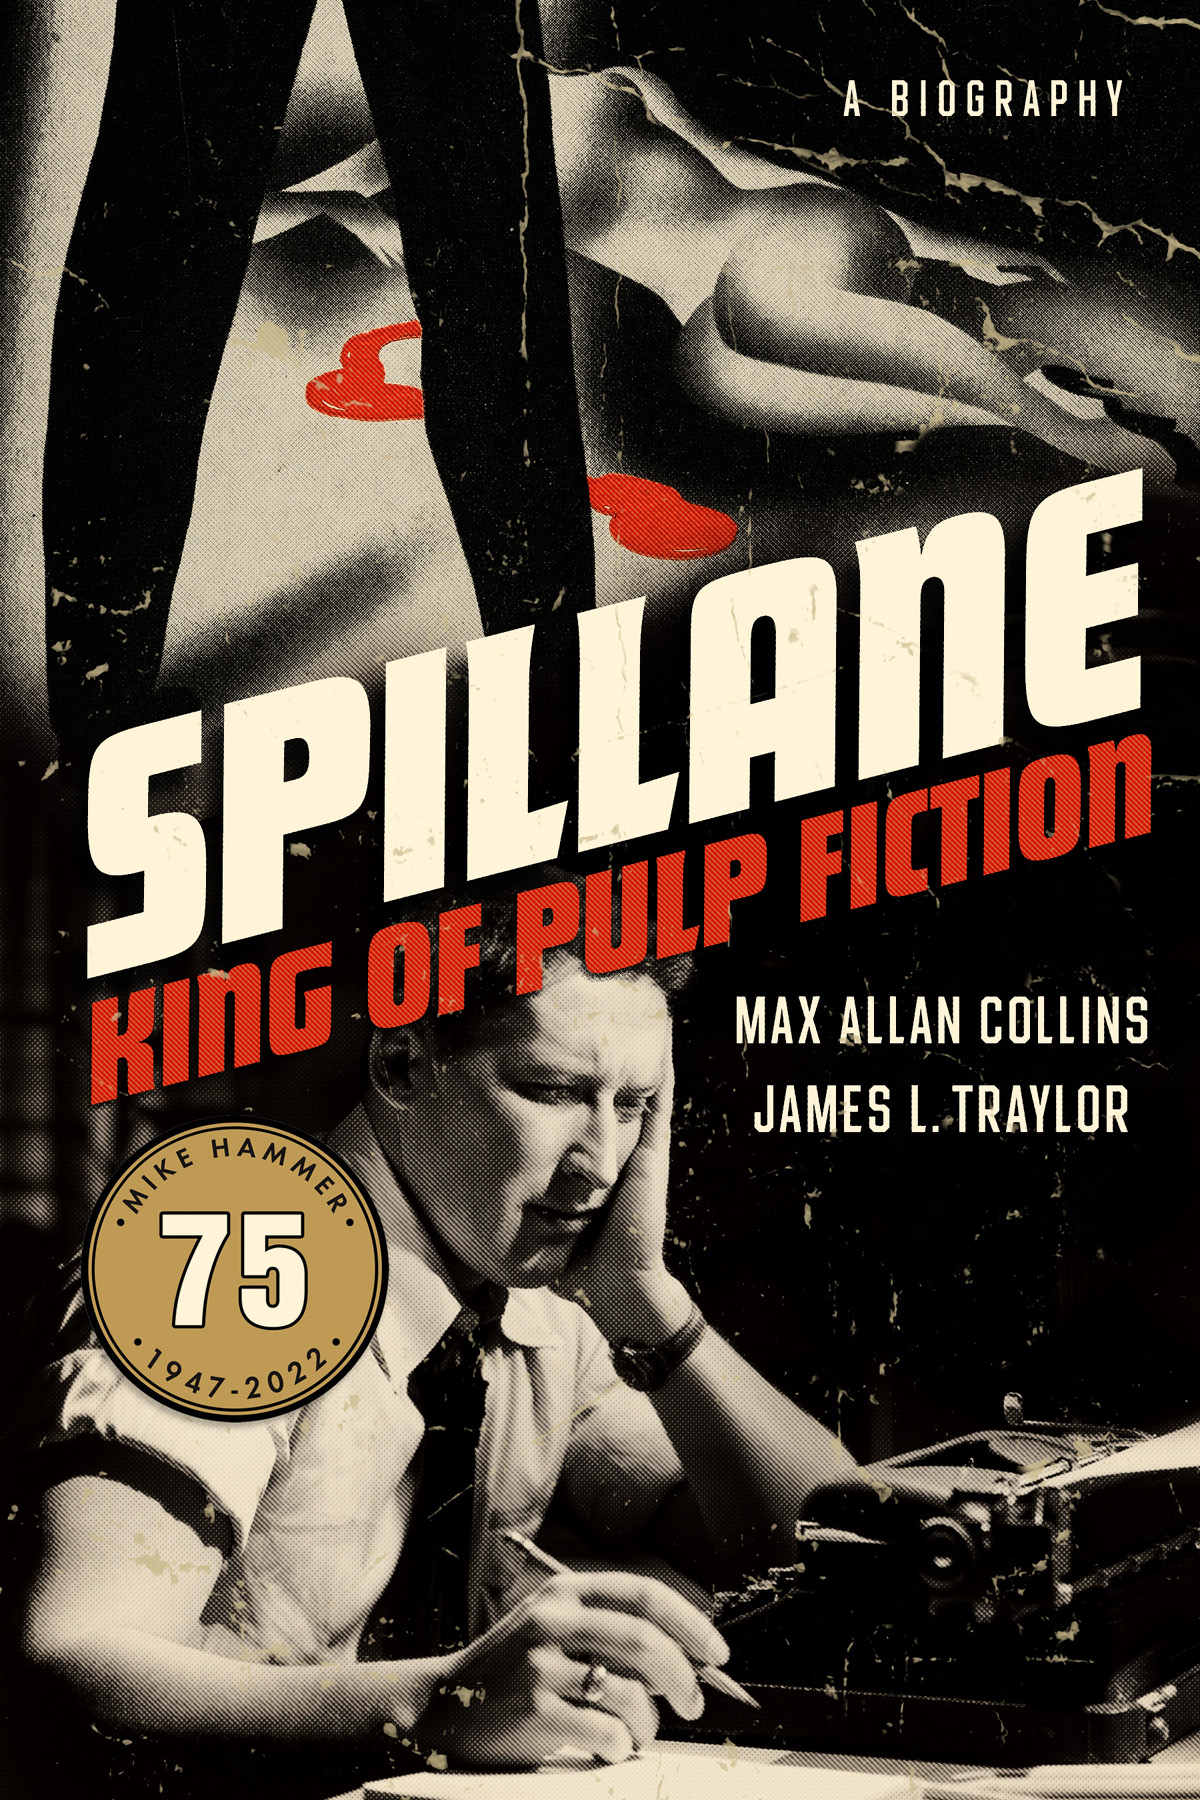 SPILLANE KING OF PULP FICTION A BIOGRAPHY MAX ALLAN COLLINS JAMES L TRAYLOR - photo 1